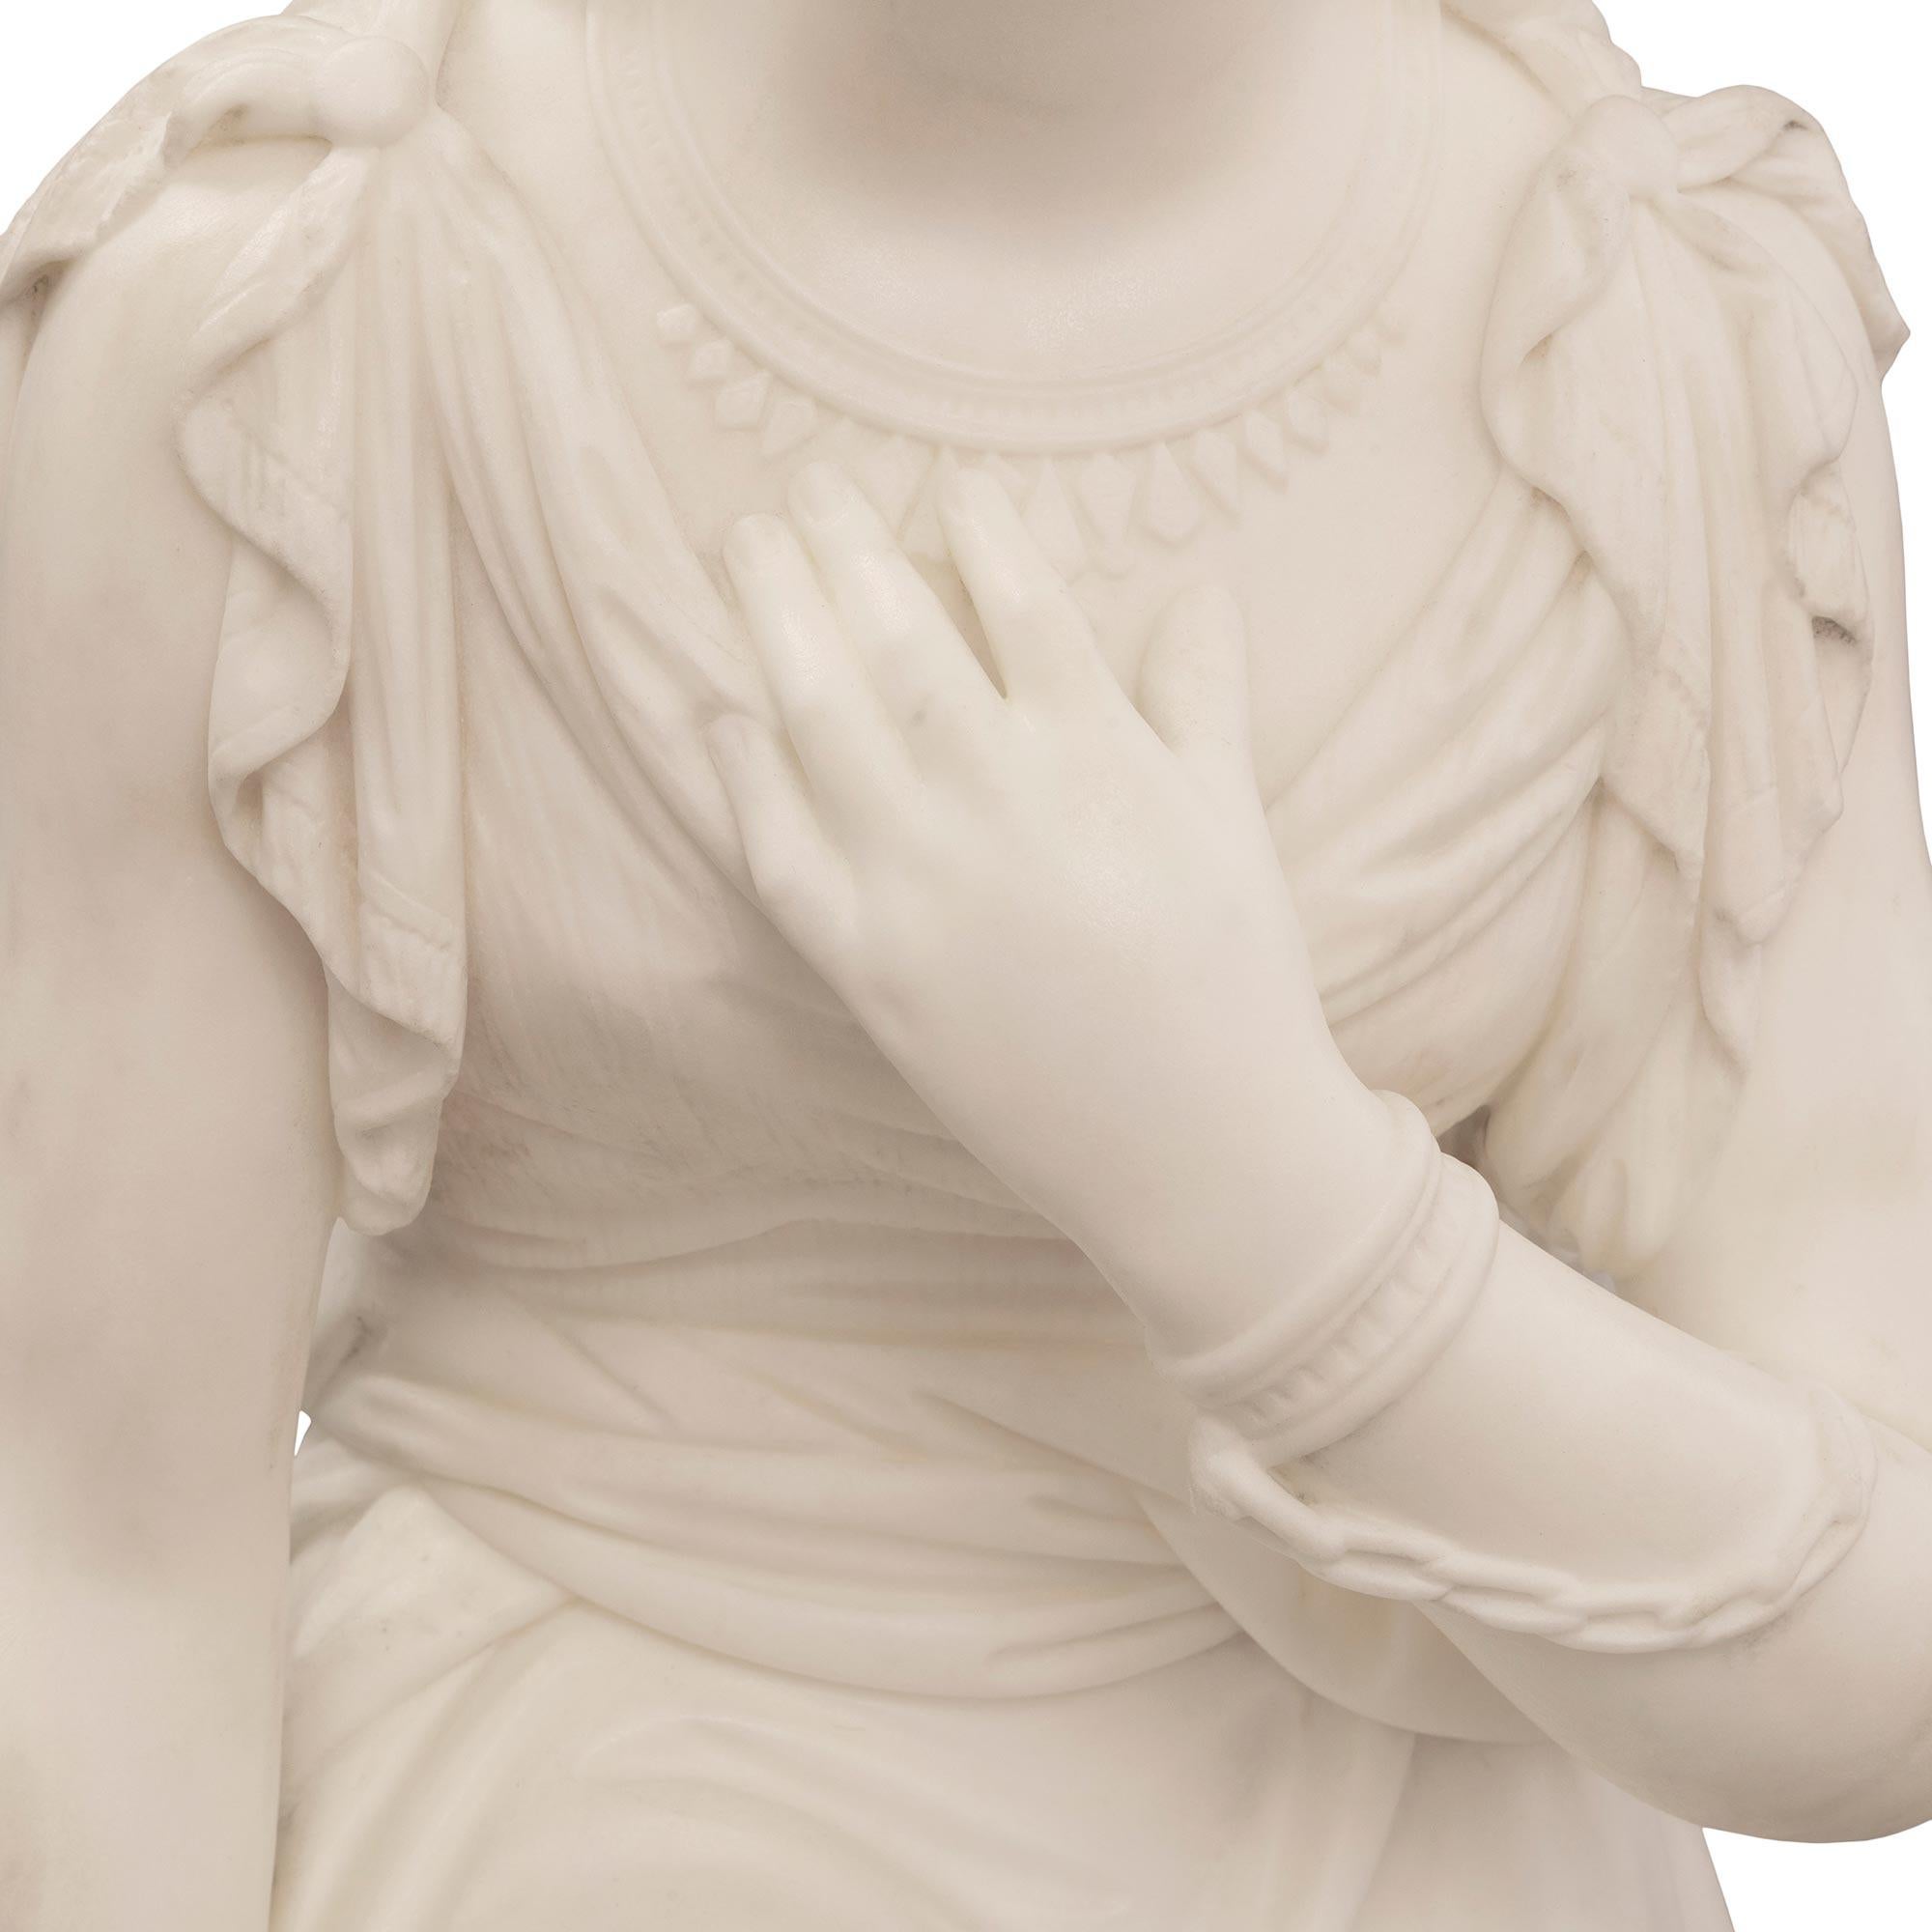 Carrara Marble A Italian 19th century white Carrara marble statue signed J. Warrington For Sale